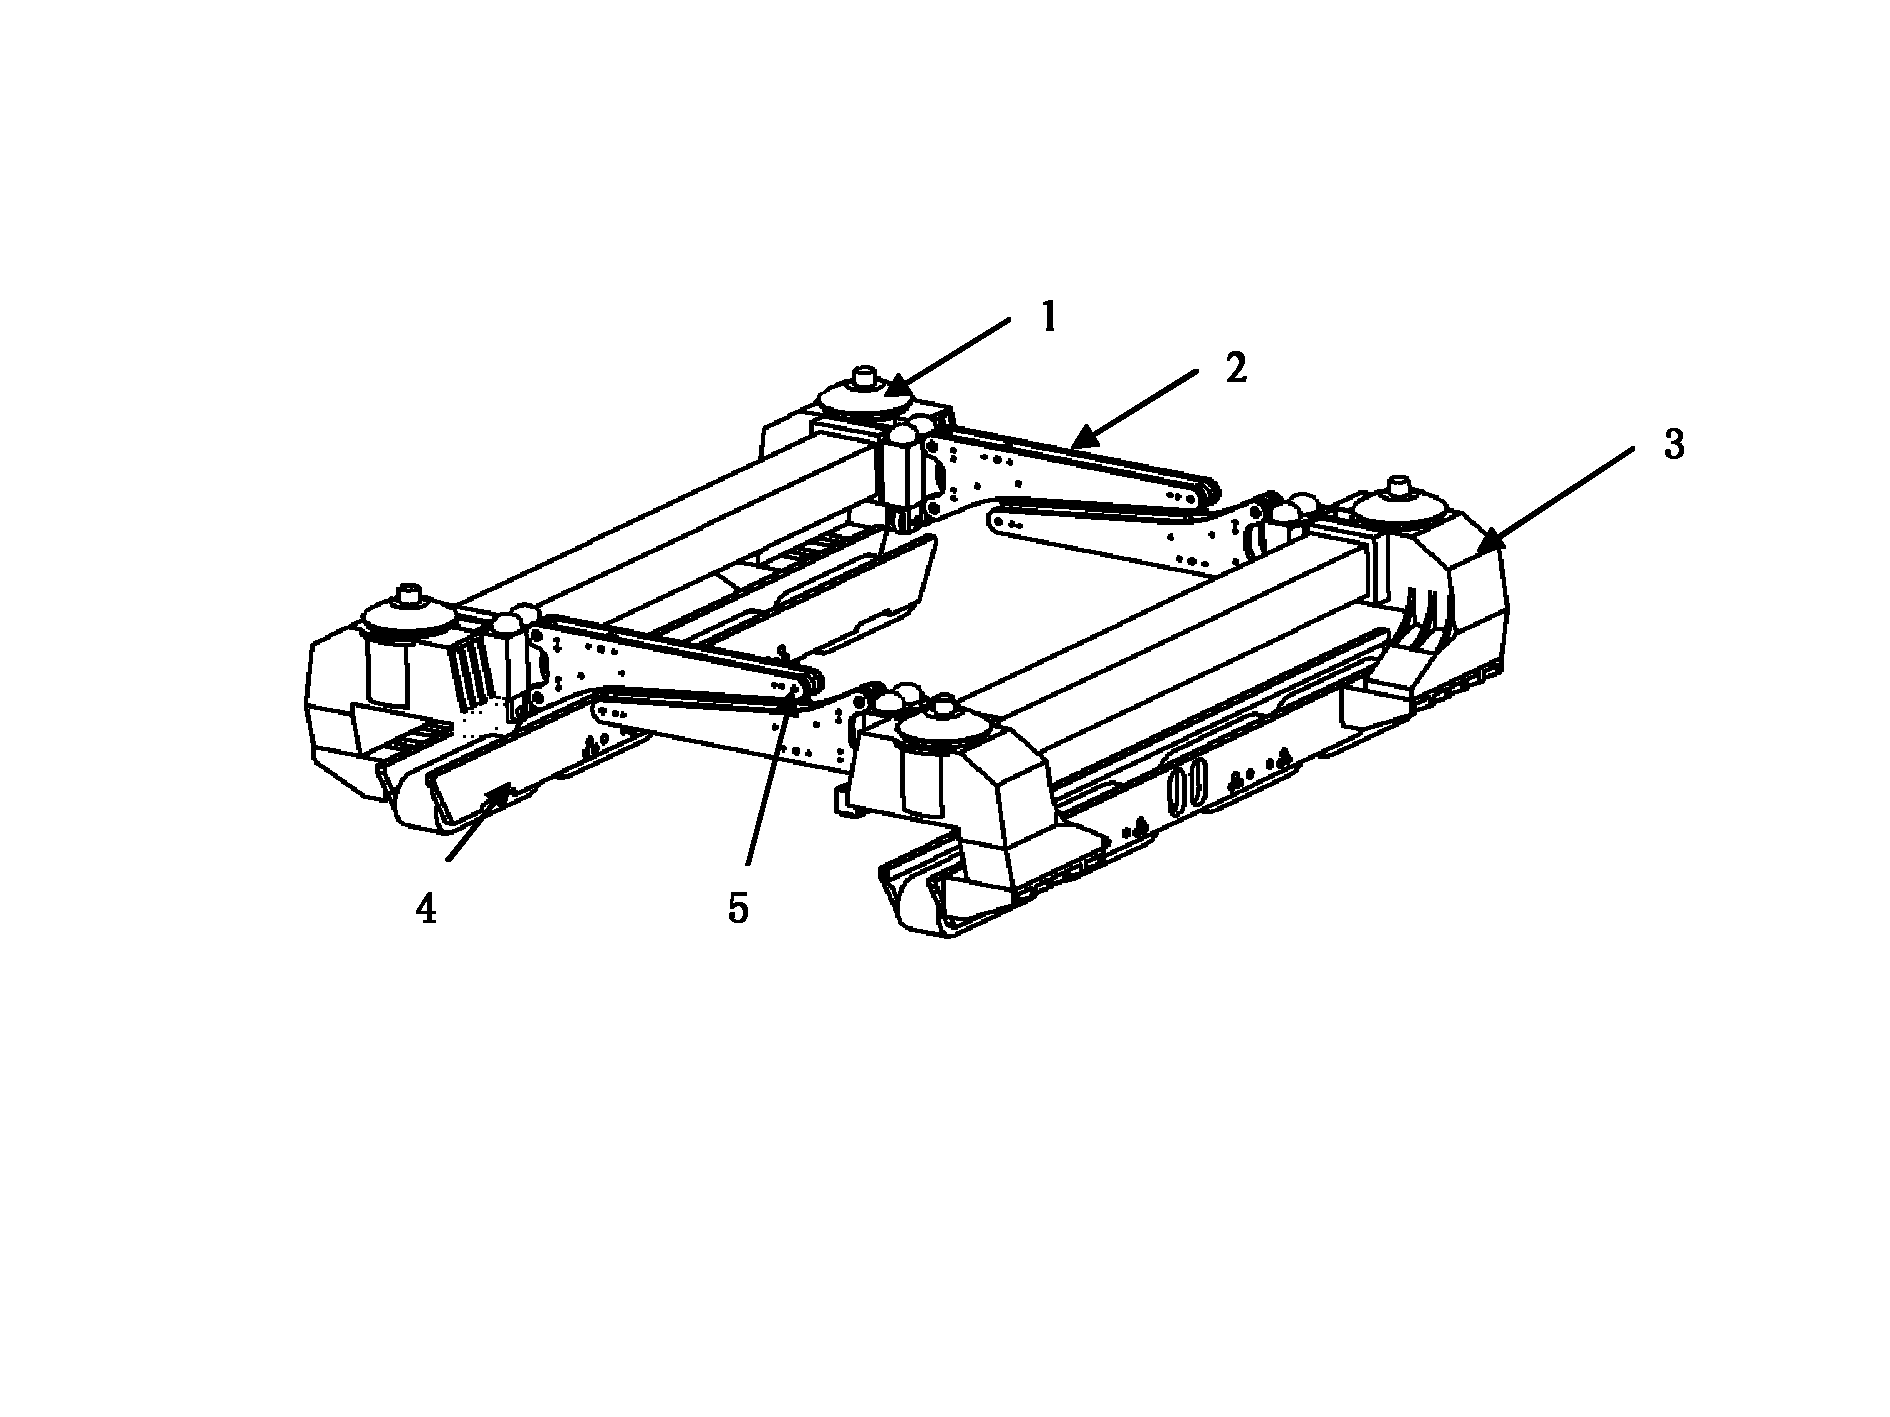 Suspension unit structure of maglev train